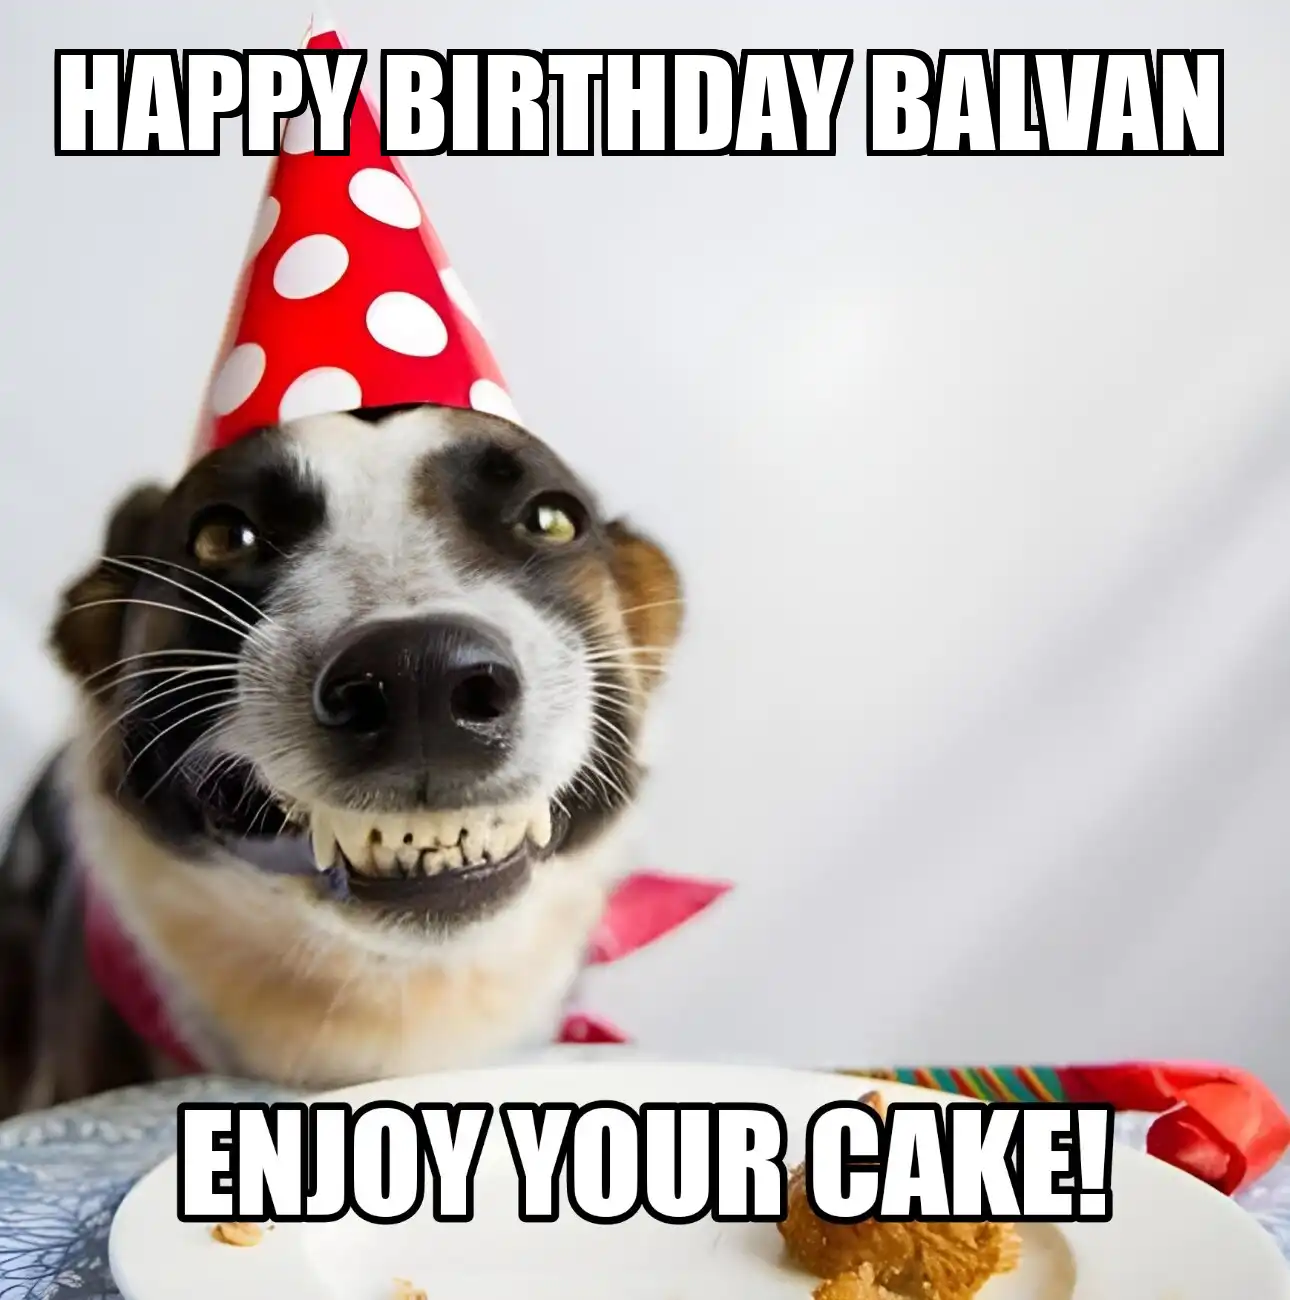 Happy Birthday Balvan Enjoy Your Cake Dog Meme